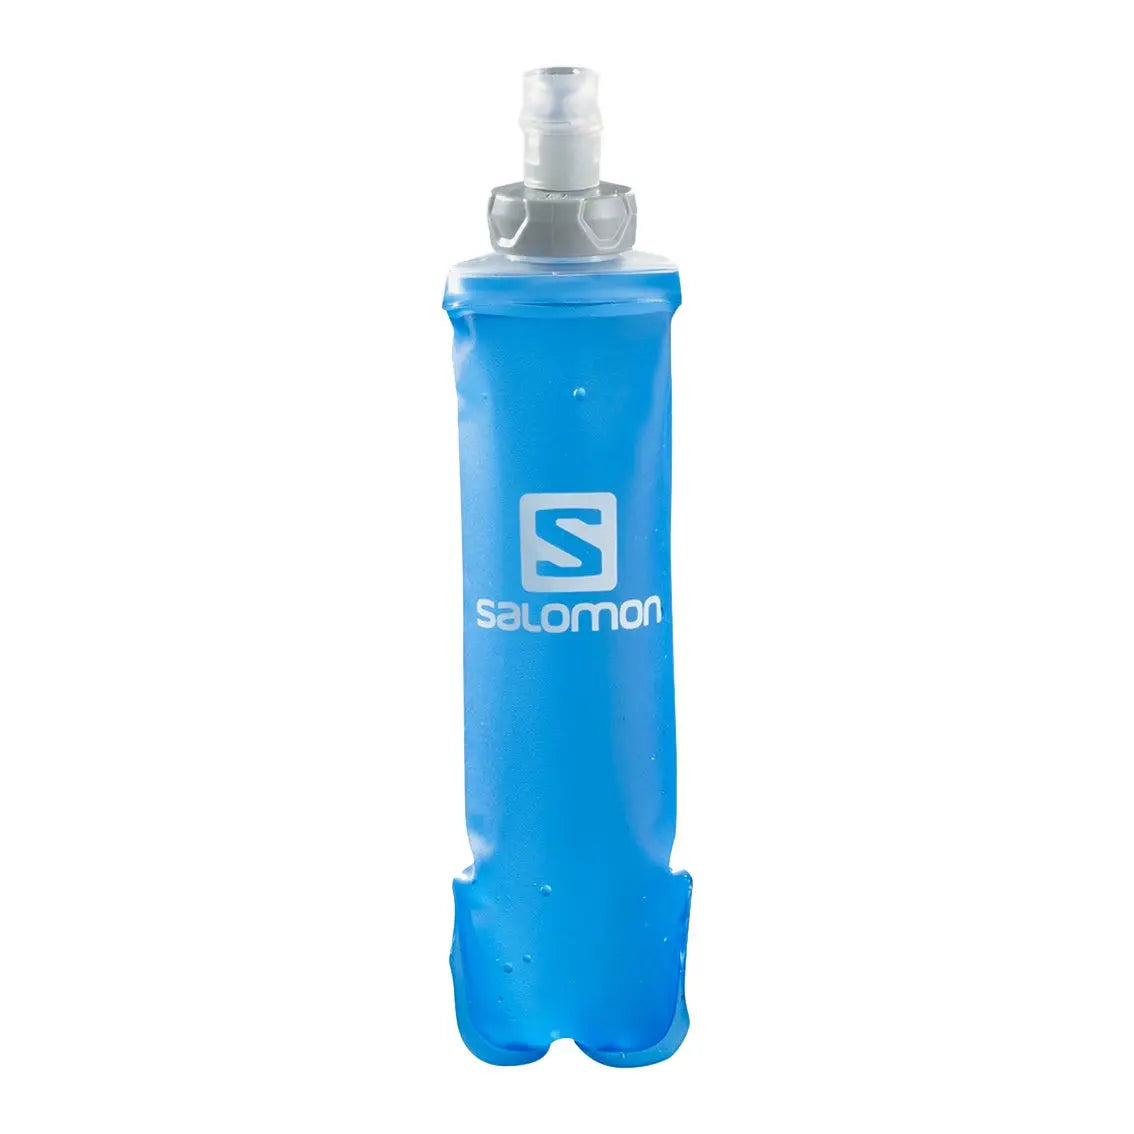 Salomon Soft Flask 250ml